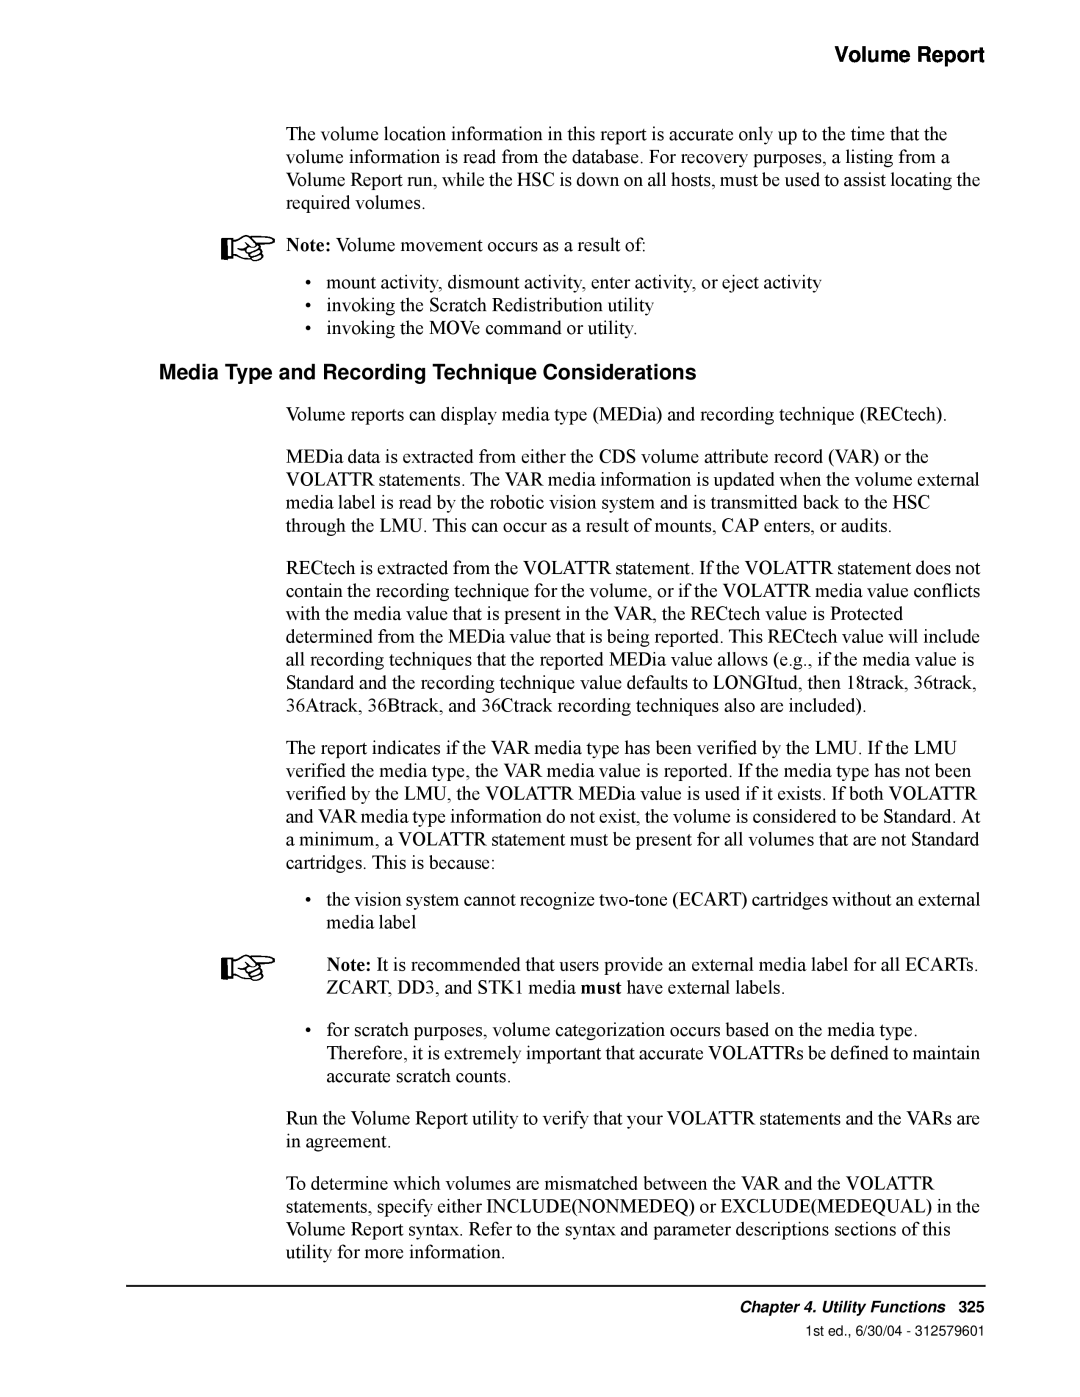 StorageTek 6 manual Media Type and Recording Technique Considerations, Volume Report 